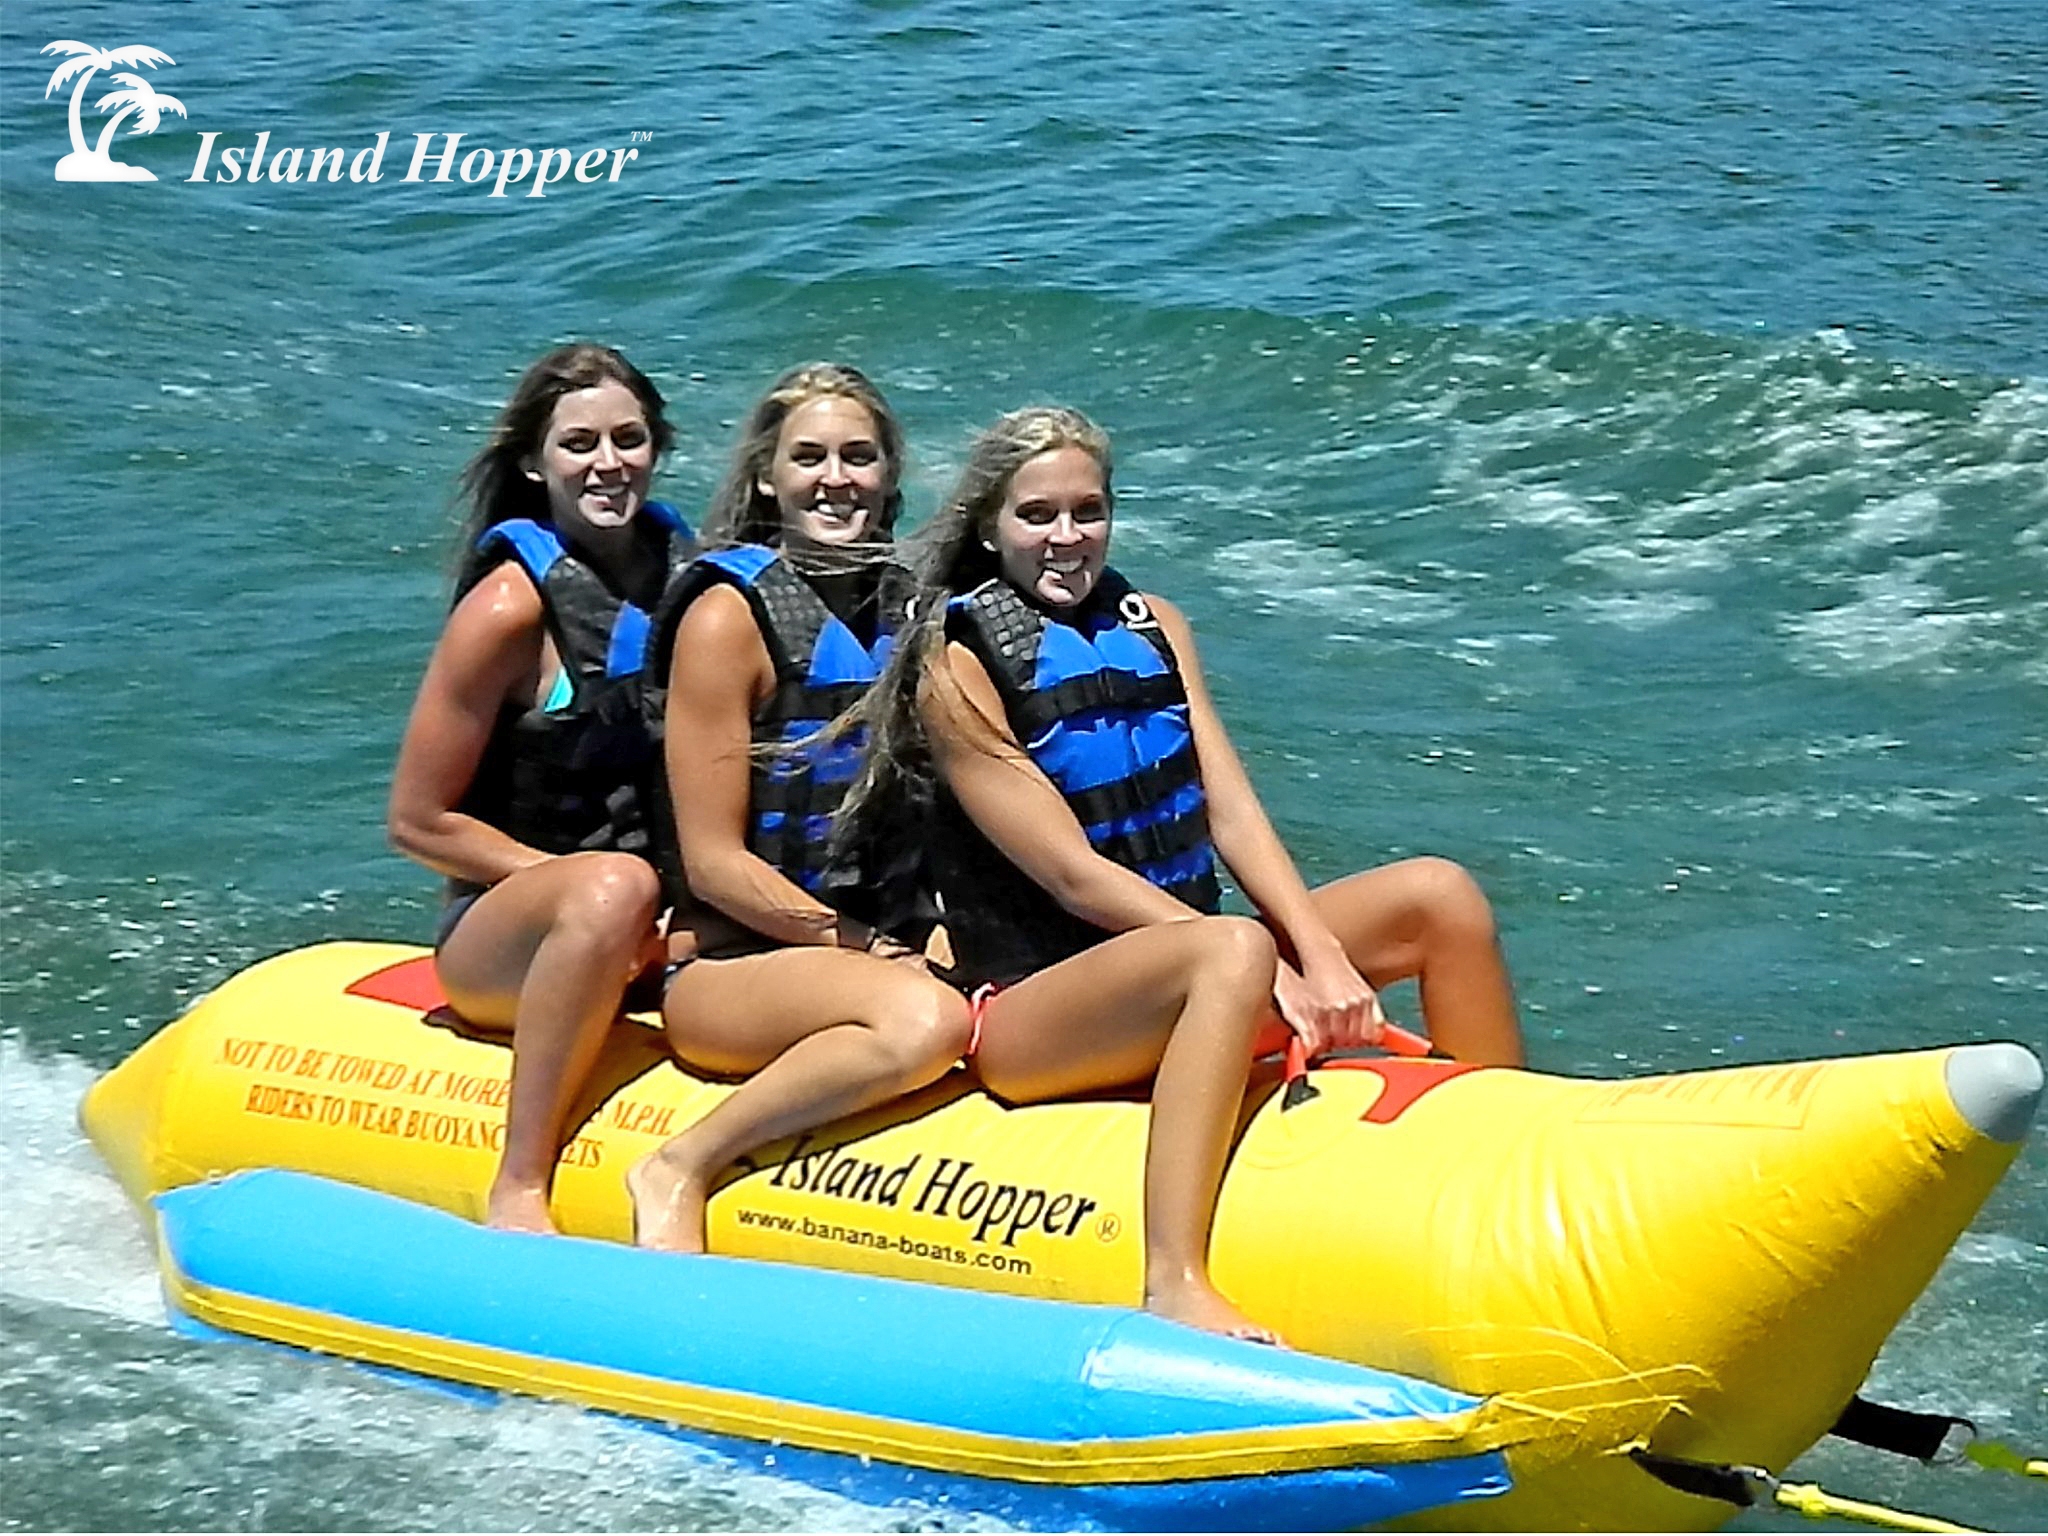 Island Hopper 3 Person Inflatable Banana Boat